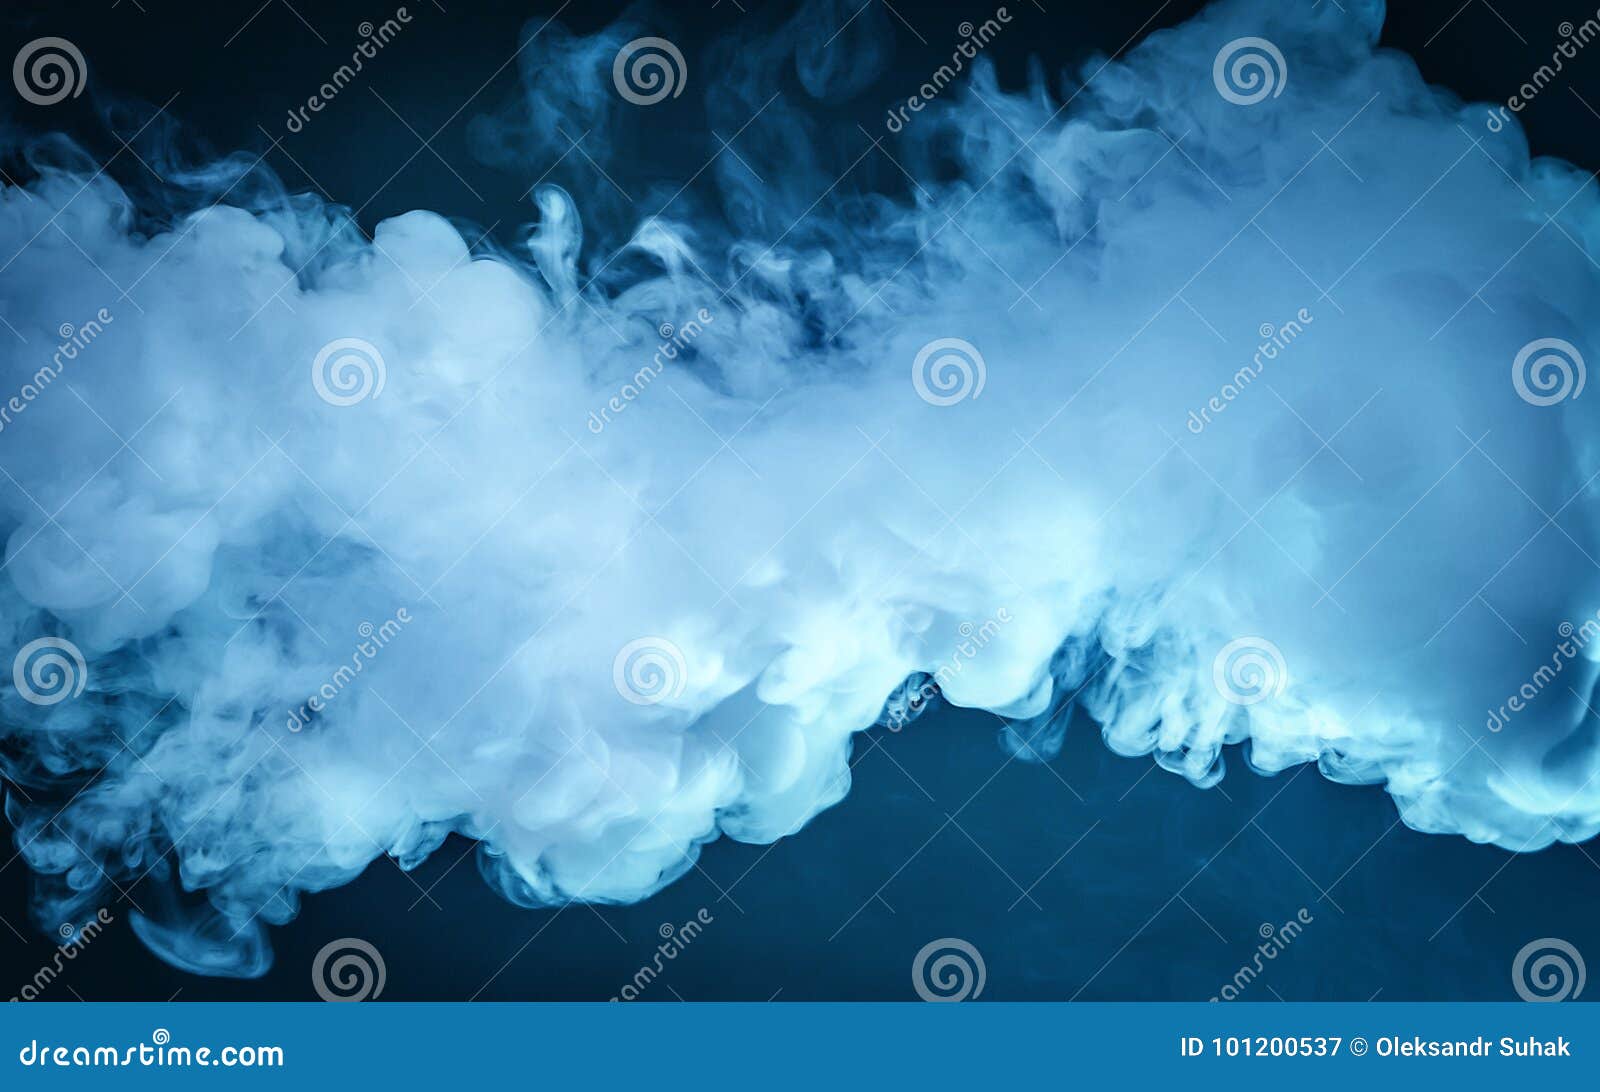 cloud of vapor. dark blue background